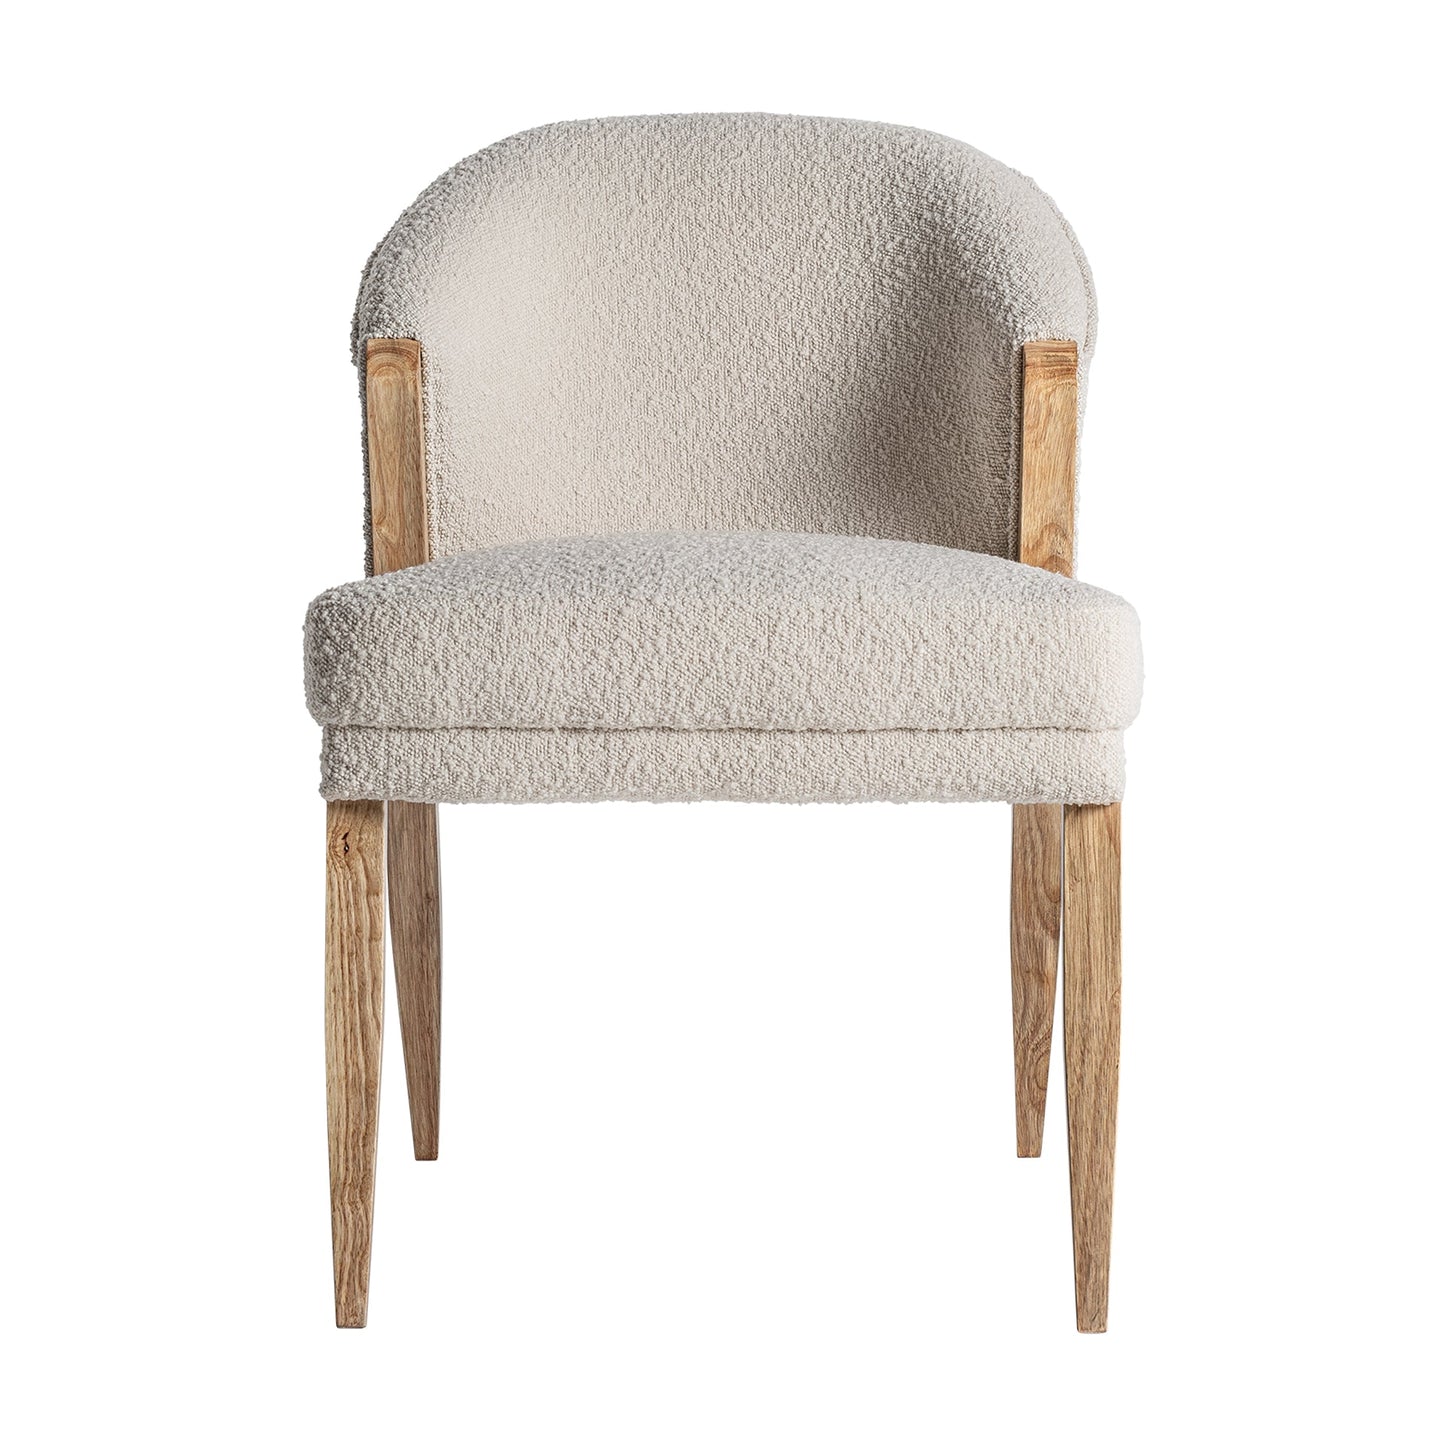 Prati Bouclé Chair in White/Natural Colour